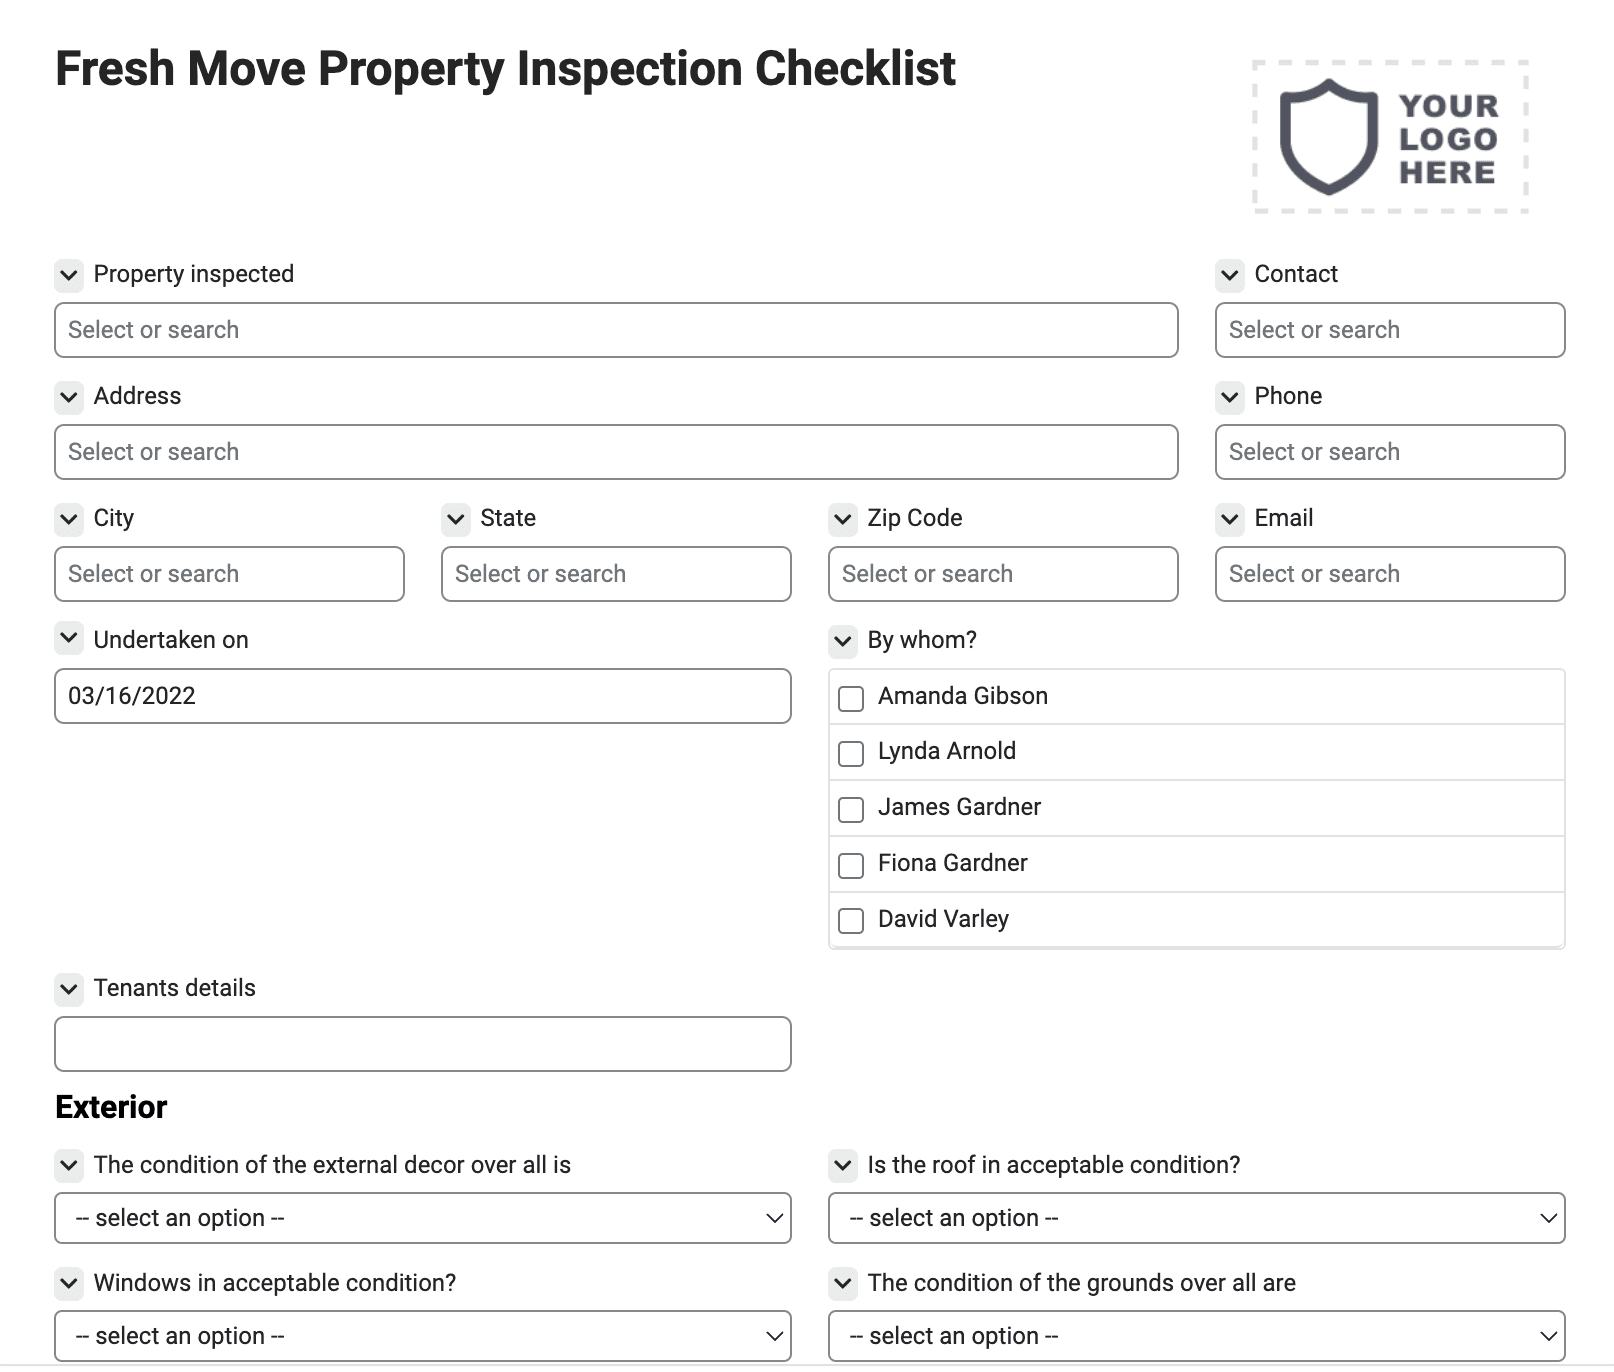 Fresh Move Property Inspection Checklist